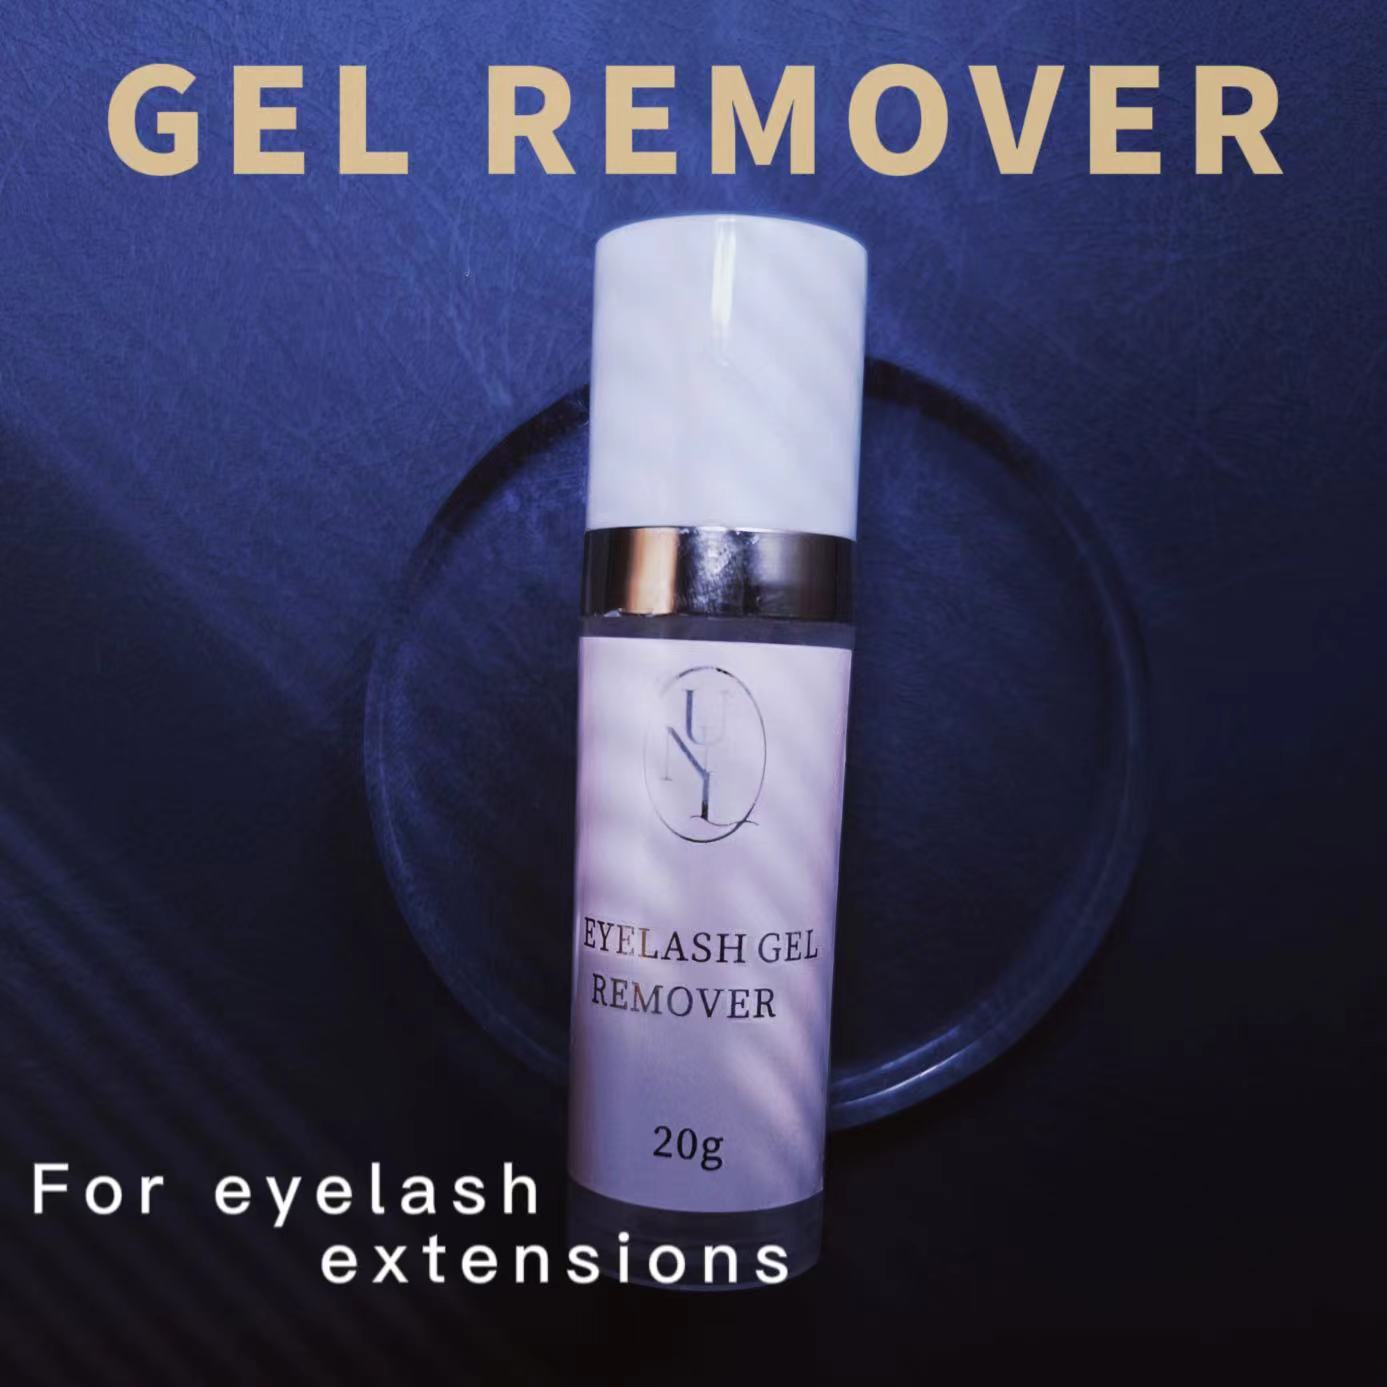 UNIQUELASH Eyelash Extension Gel Remover Set Fast Clear Up False Eyelash Glue Hypoallergenic Remover Lash Extension Makeup Tools -pumping type (20g)